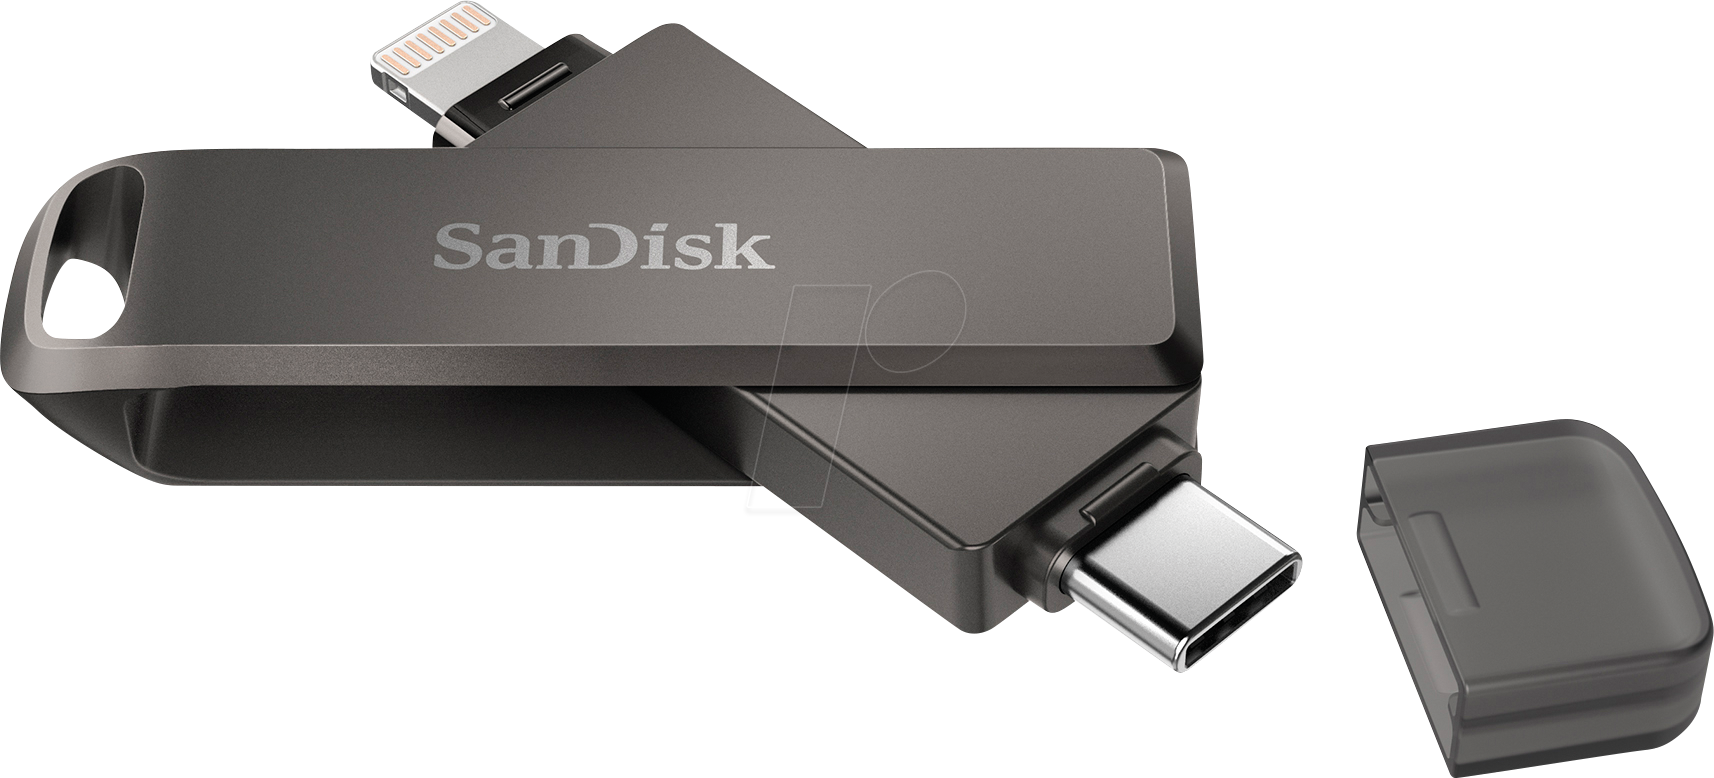 SDIX70N064GGN6NN - USB-Stick, USB 3.0, 64 GB, iXpand Luxe, Lightning, USB-C